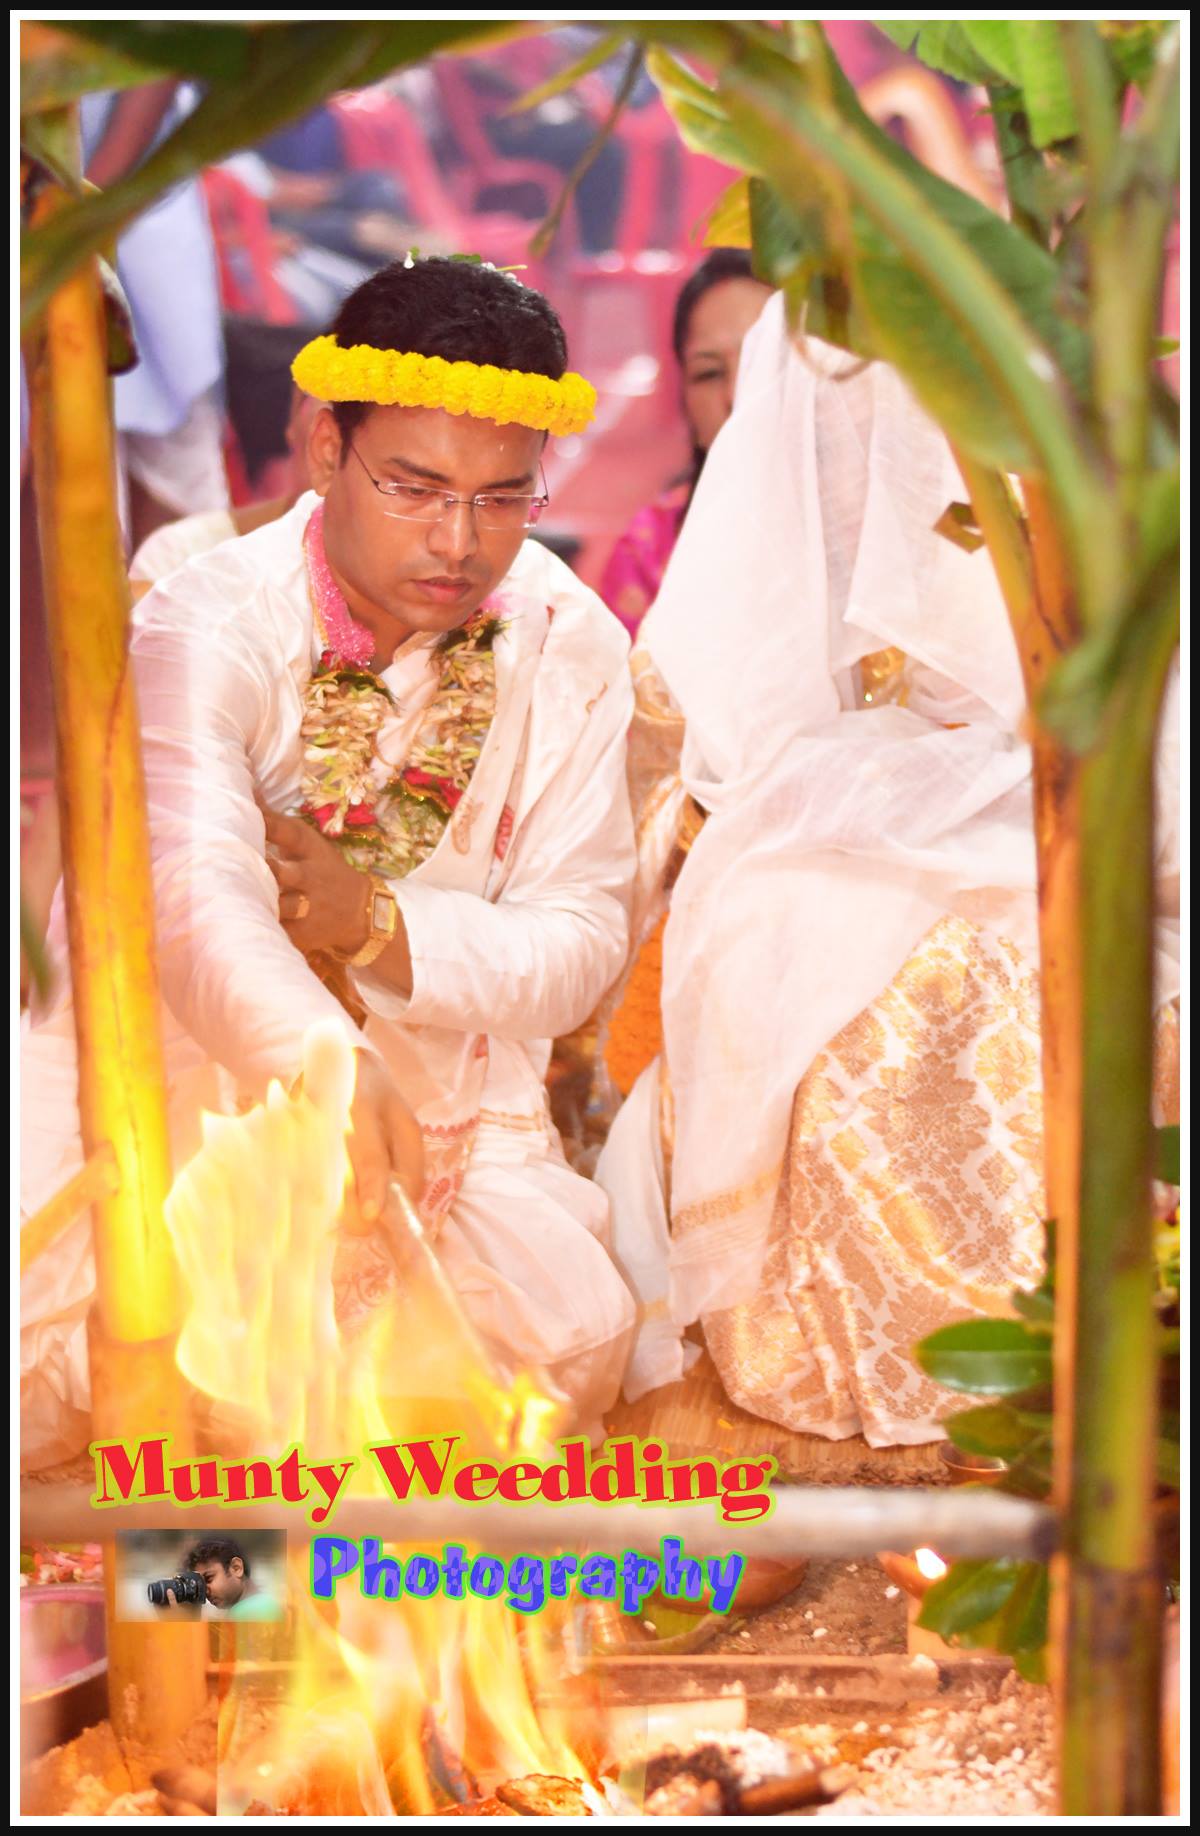 Munty Wedding Photography